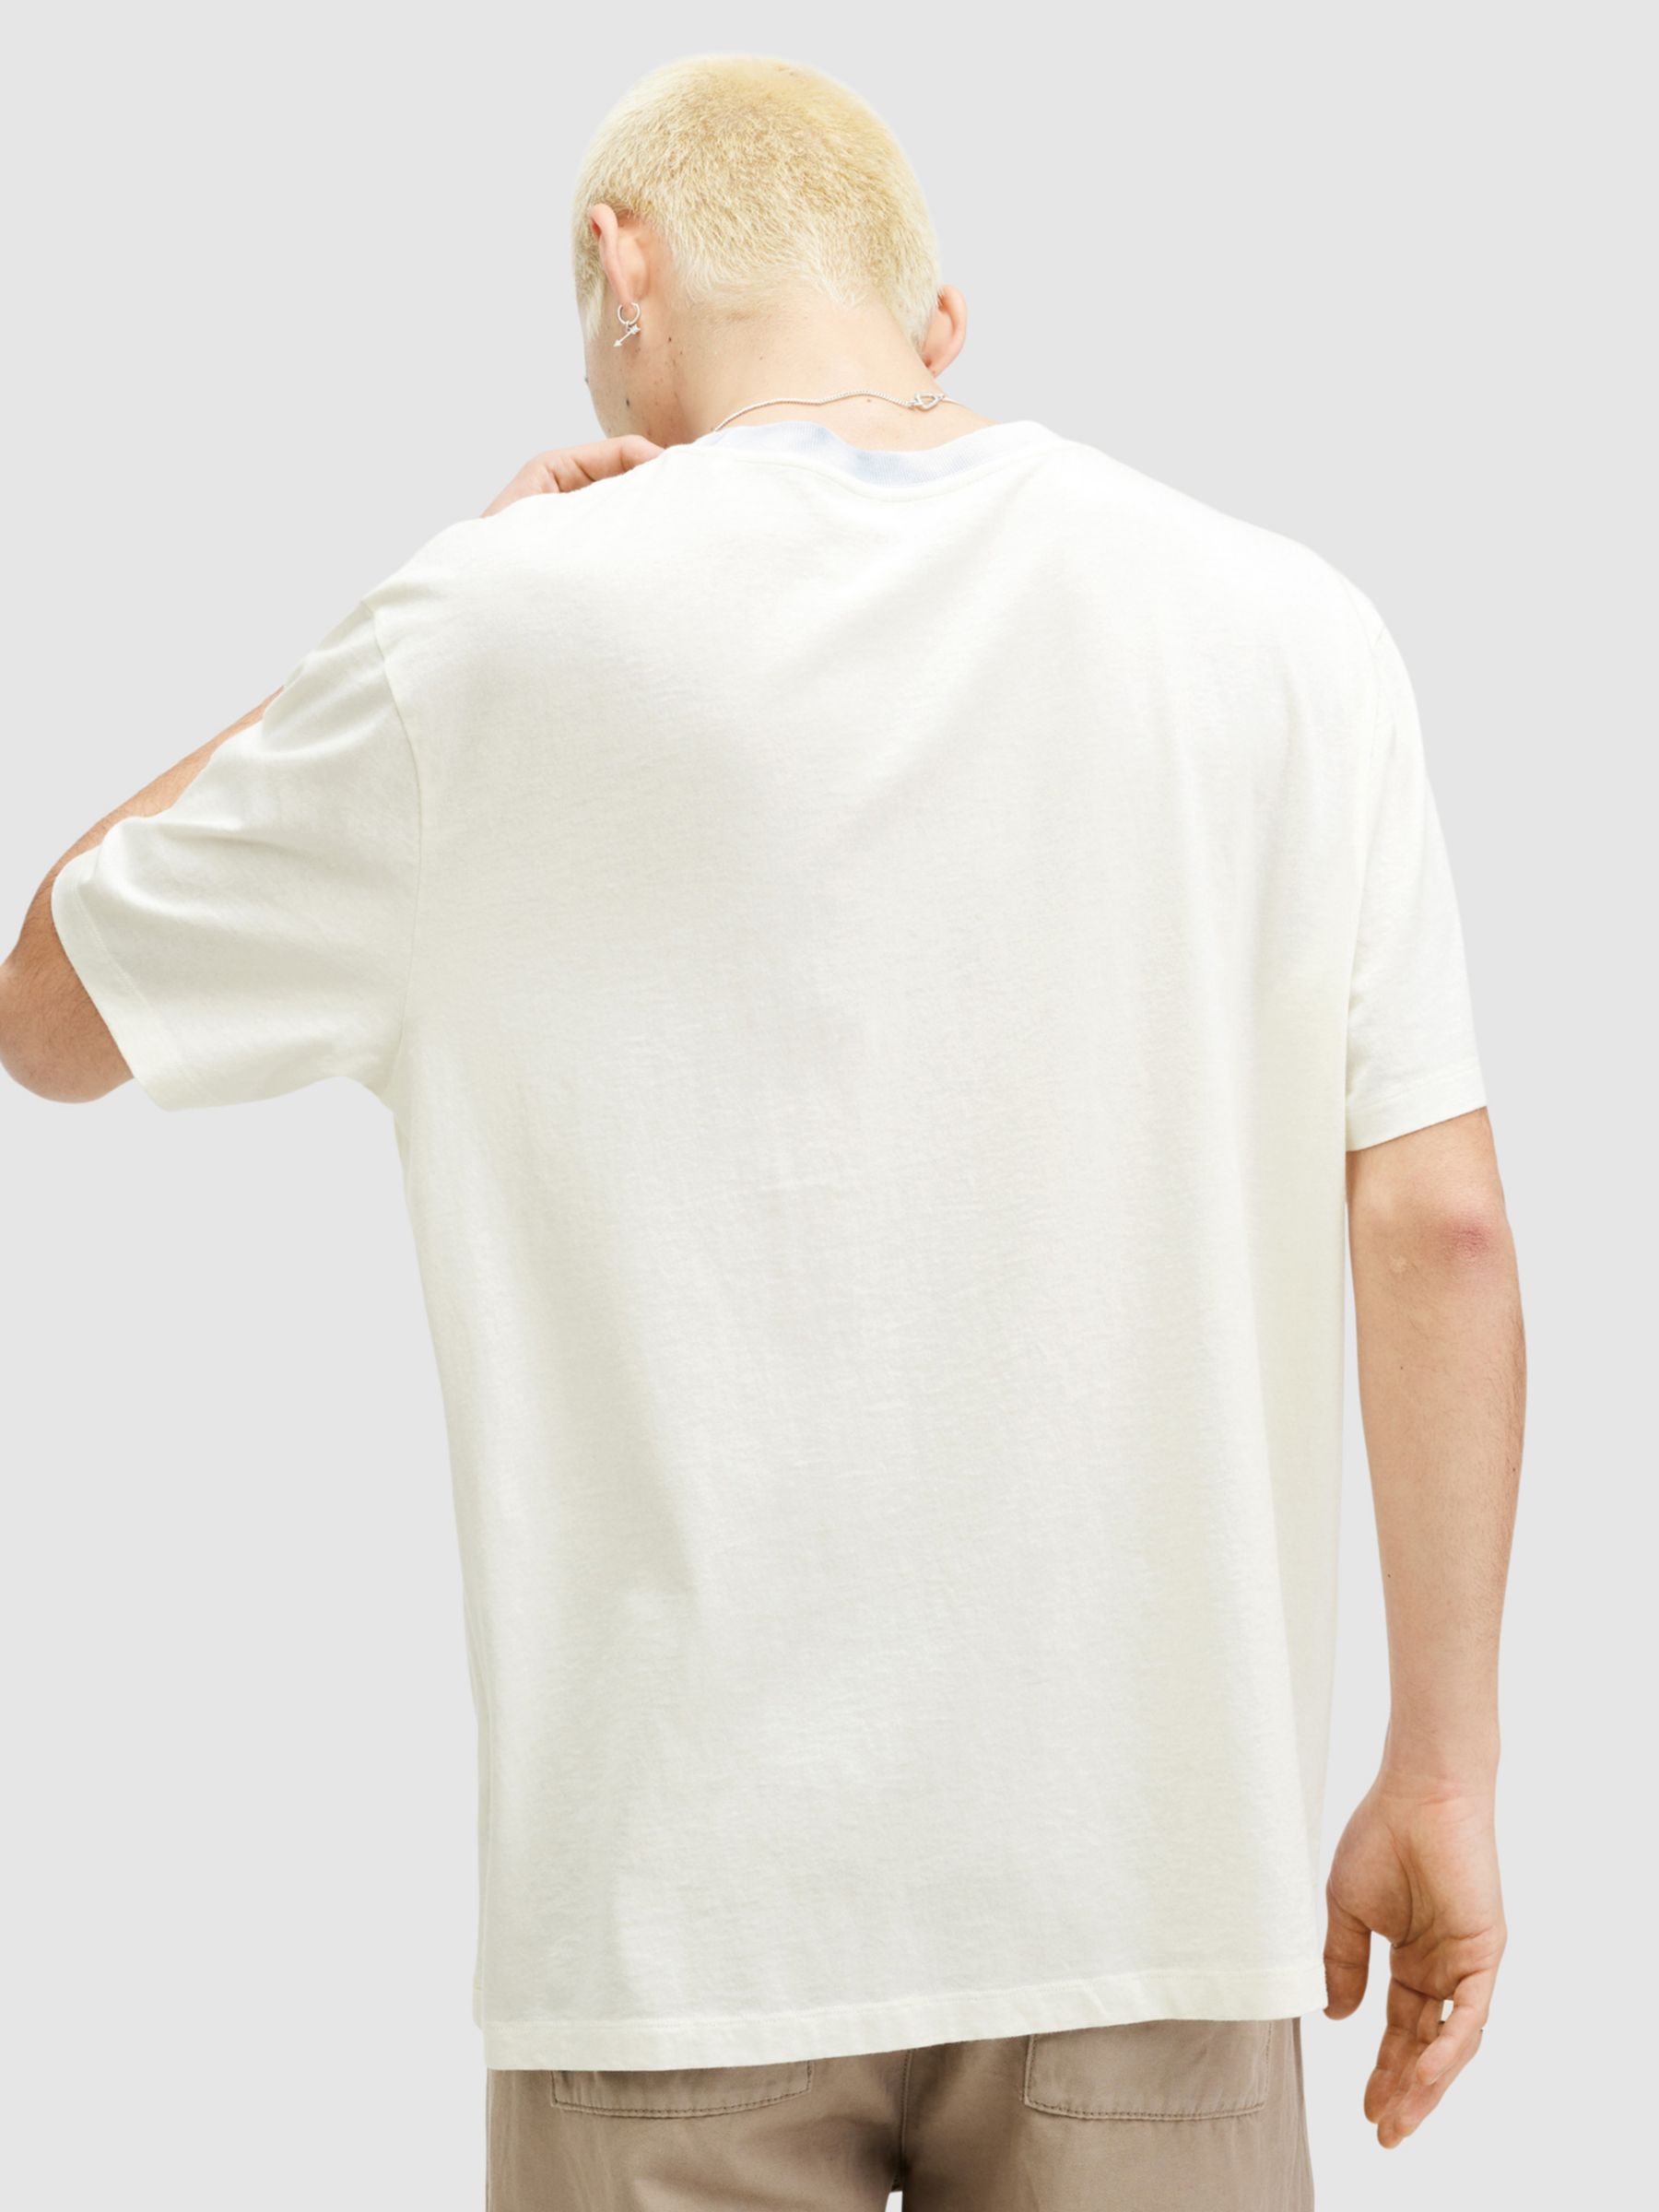 AllSaints Indy Organic Cotton Short Sleeve Crew Neck T-Shirt, Cala White, L